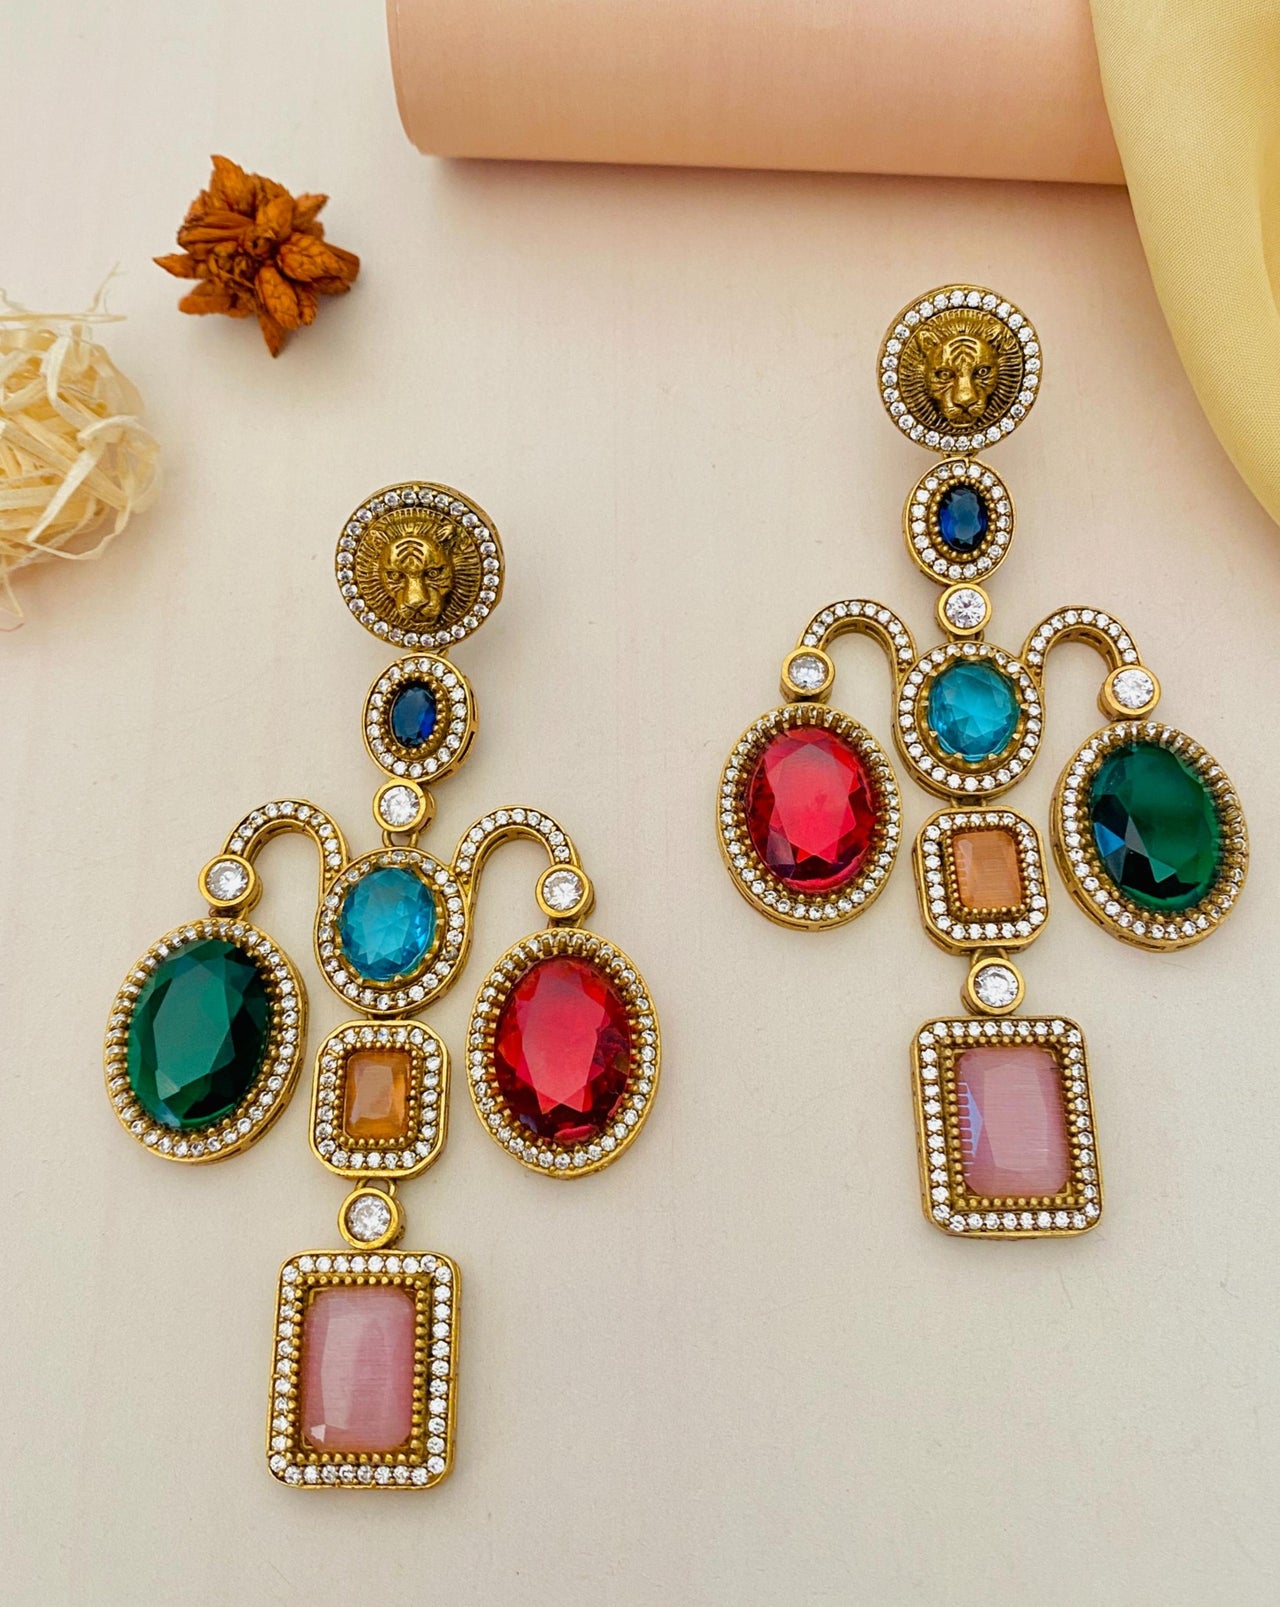 Gold Plated Sabyasachi Designer Indian Earrings Set - Abdesignsjewellery